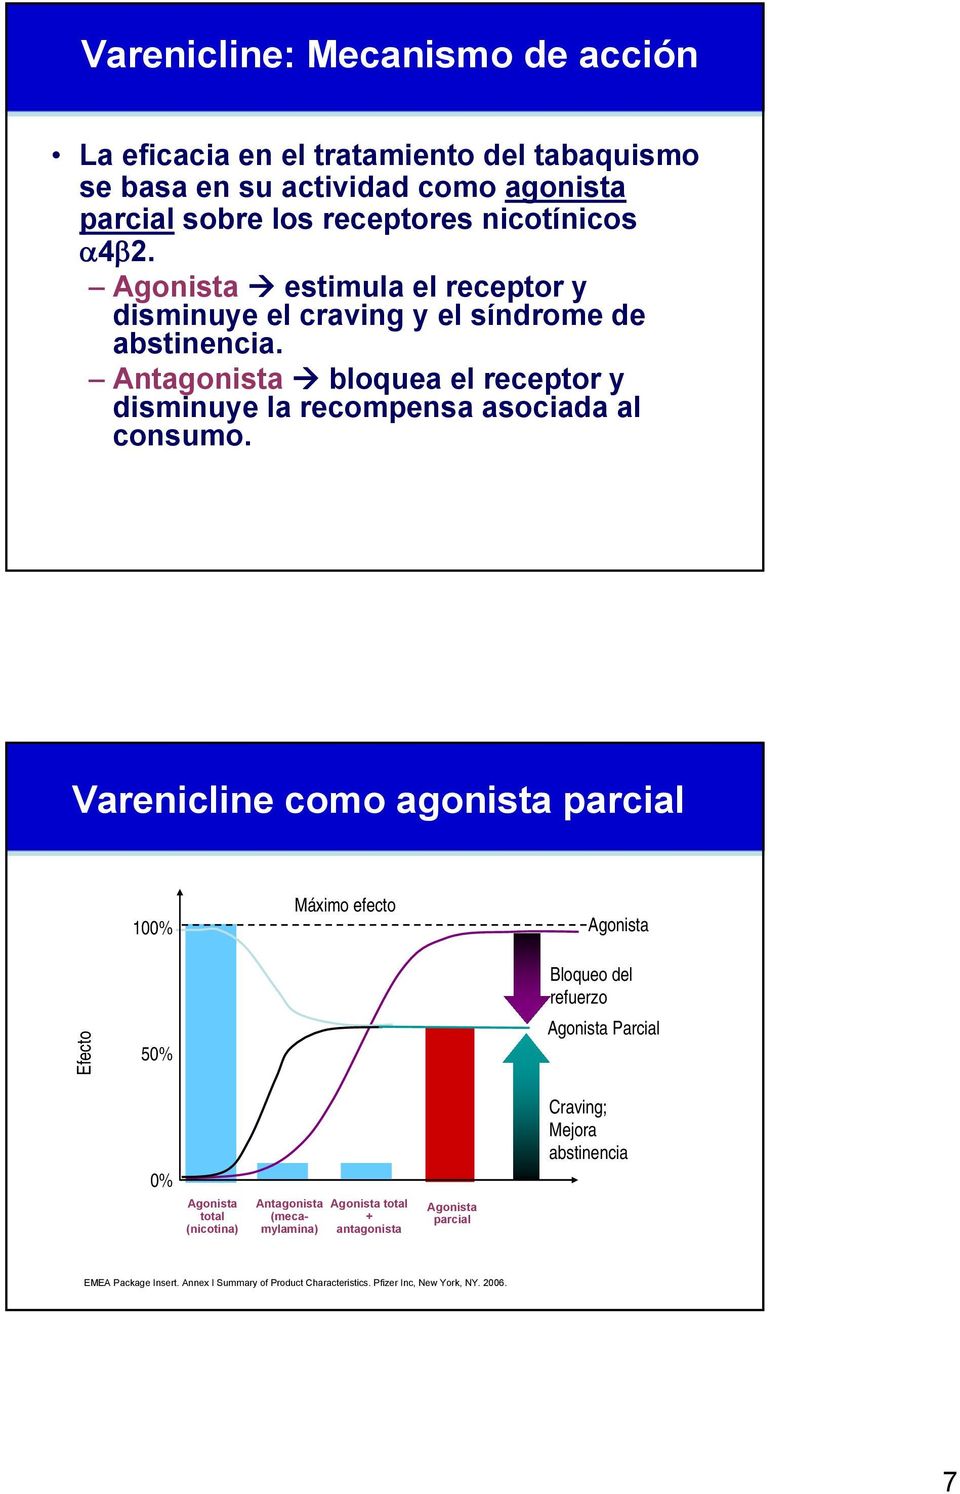 Varenicline como agonista parcial 100% Máximo efecto Agonista Efecto 50% Bloqueo del refuerzo Agonista Parcial 0% Agonista total (nicotina) Antagonista (mecamylamina)